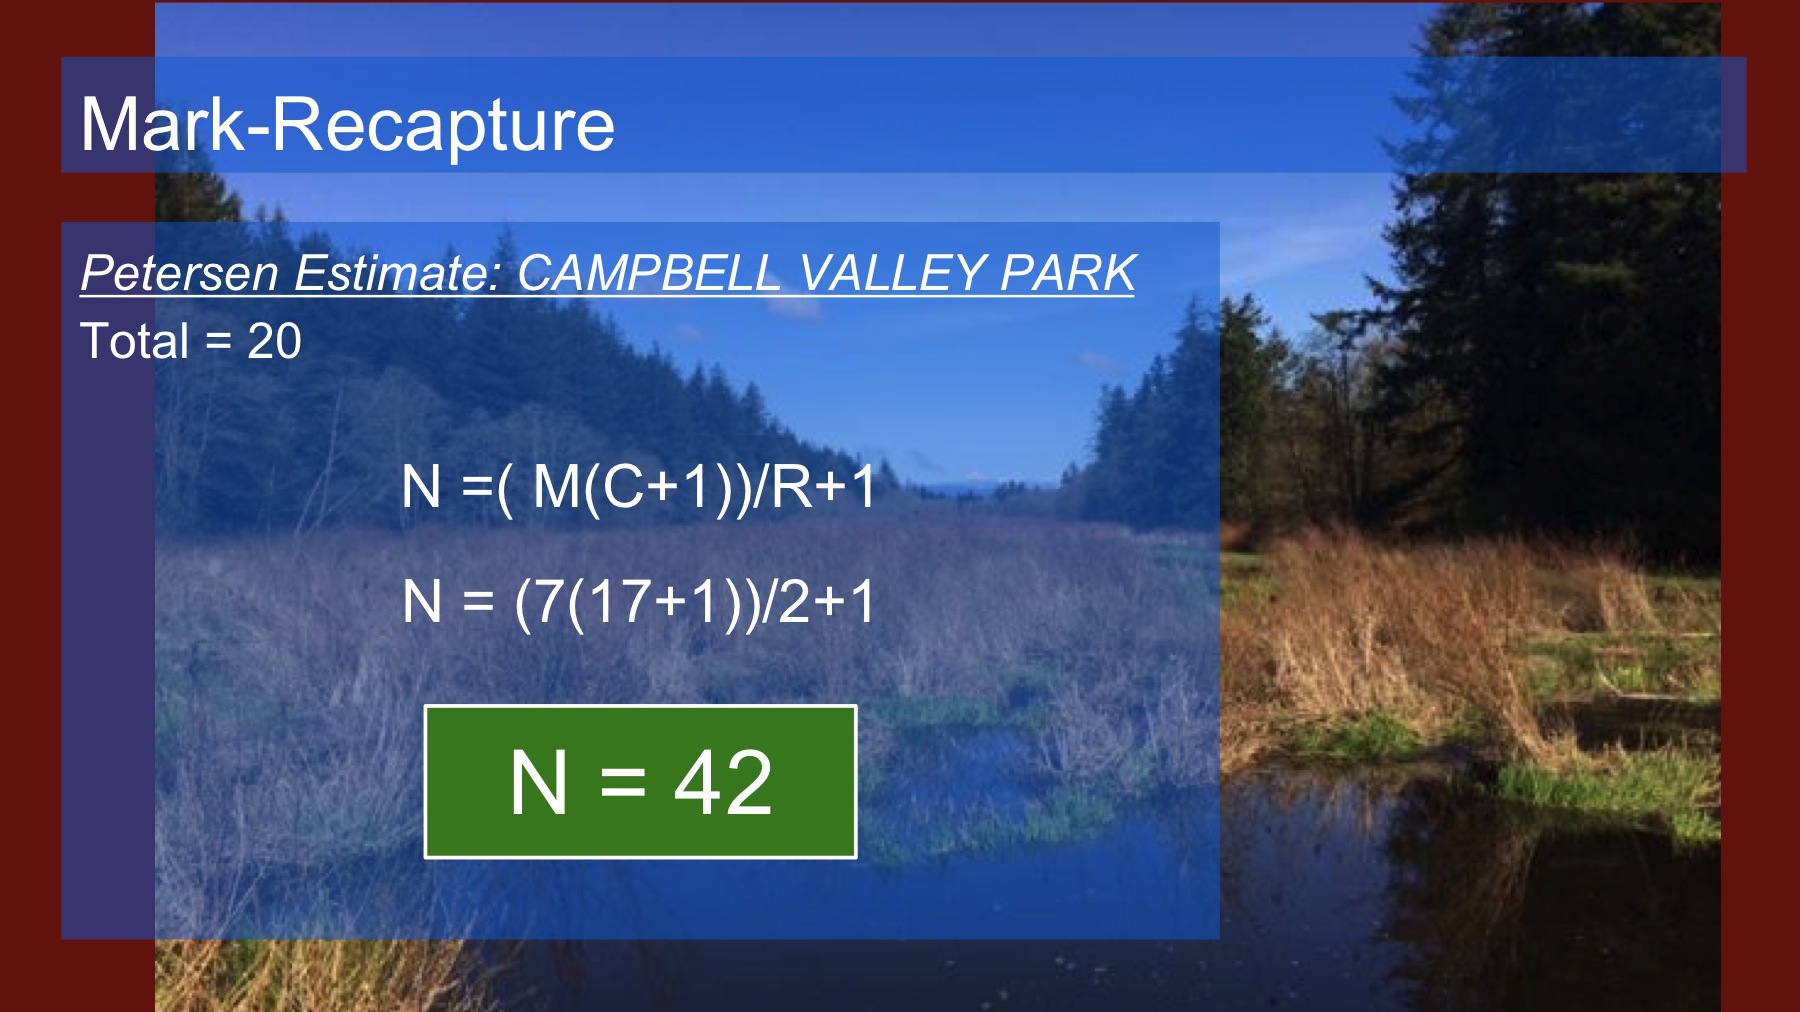 Mark Recapture Estimate - Campbell Valley Park